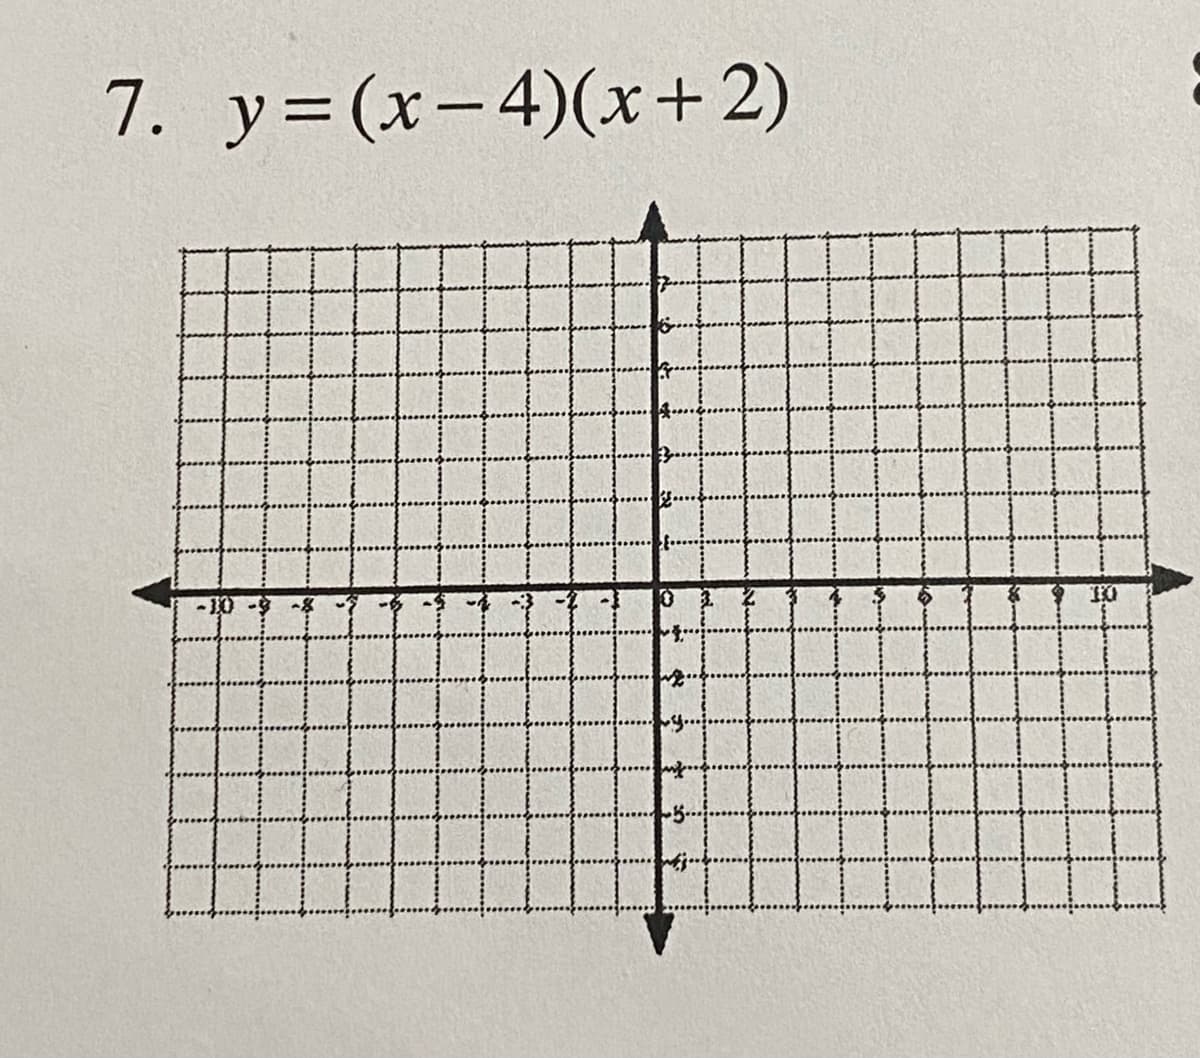 7. y=(x-4)(x+2)
田
